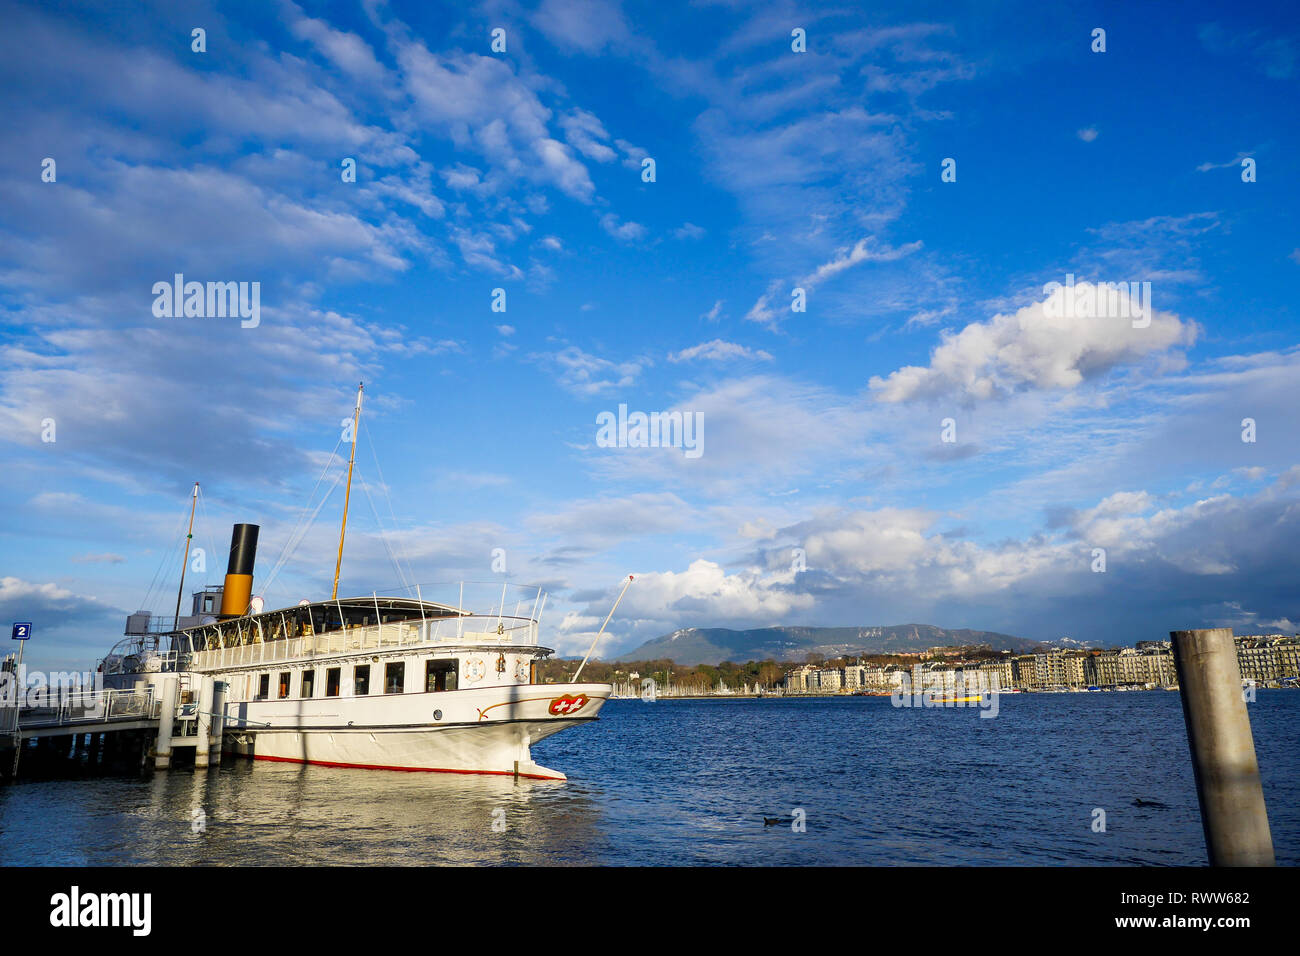 Il Rhone, swiss sternwheeler, Lago Leman, Ginevra, Svizzera Foto Stock